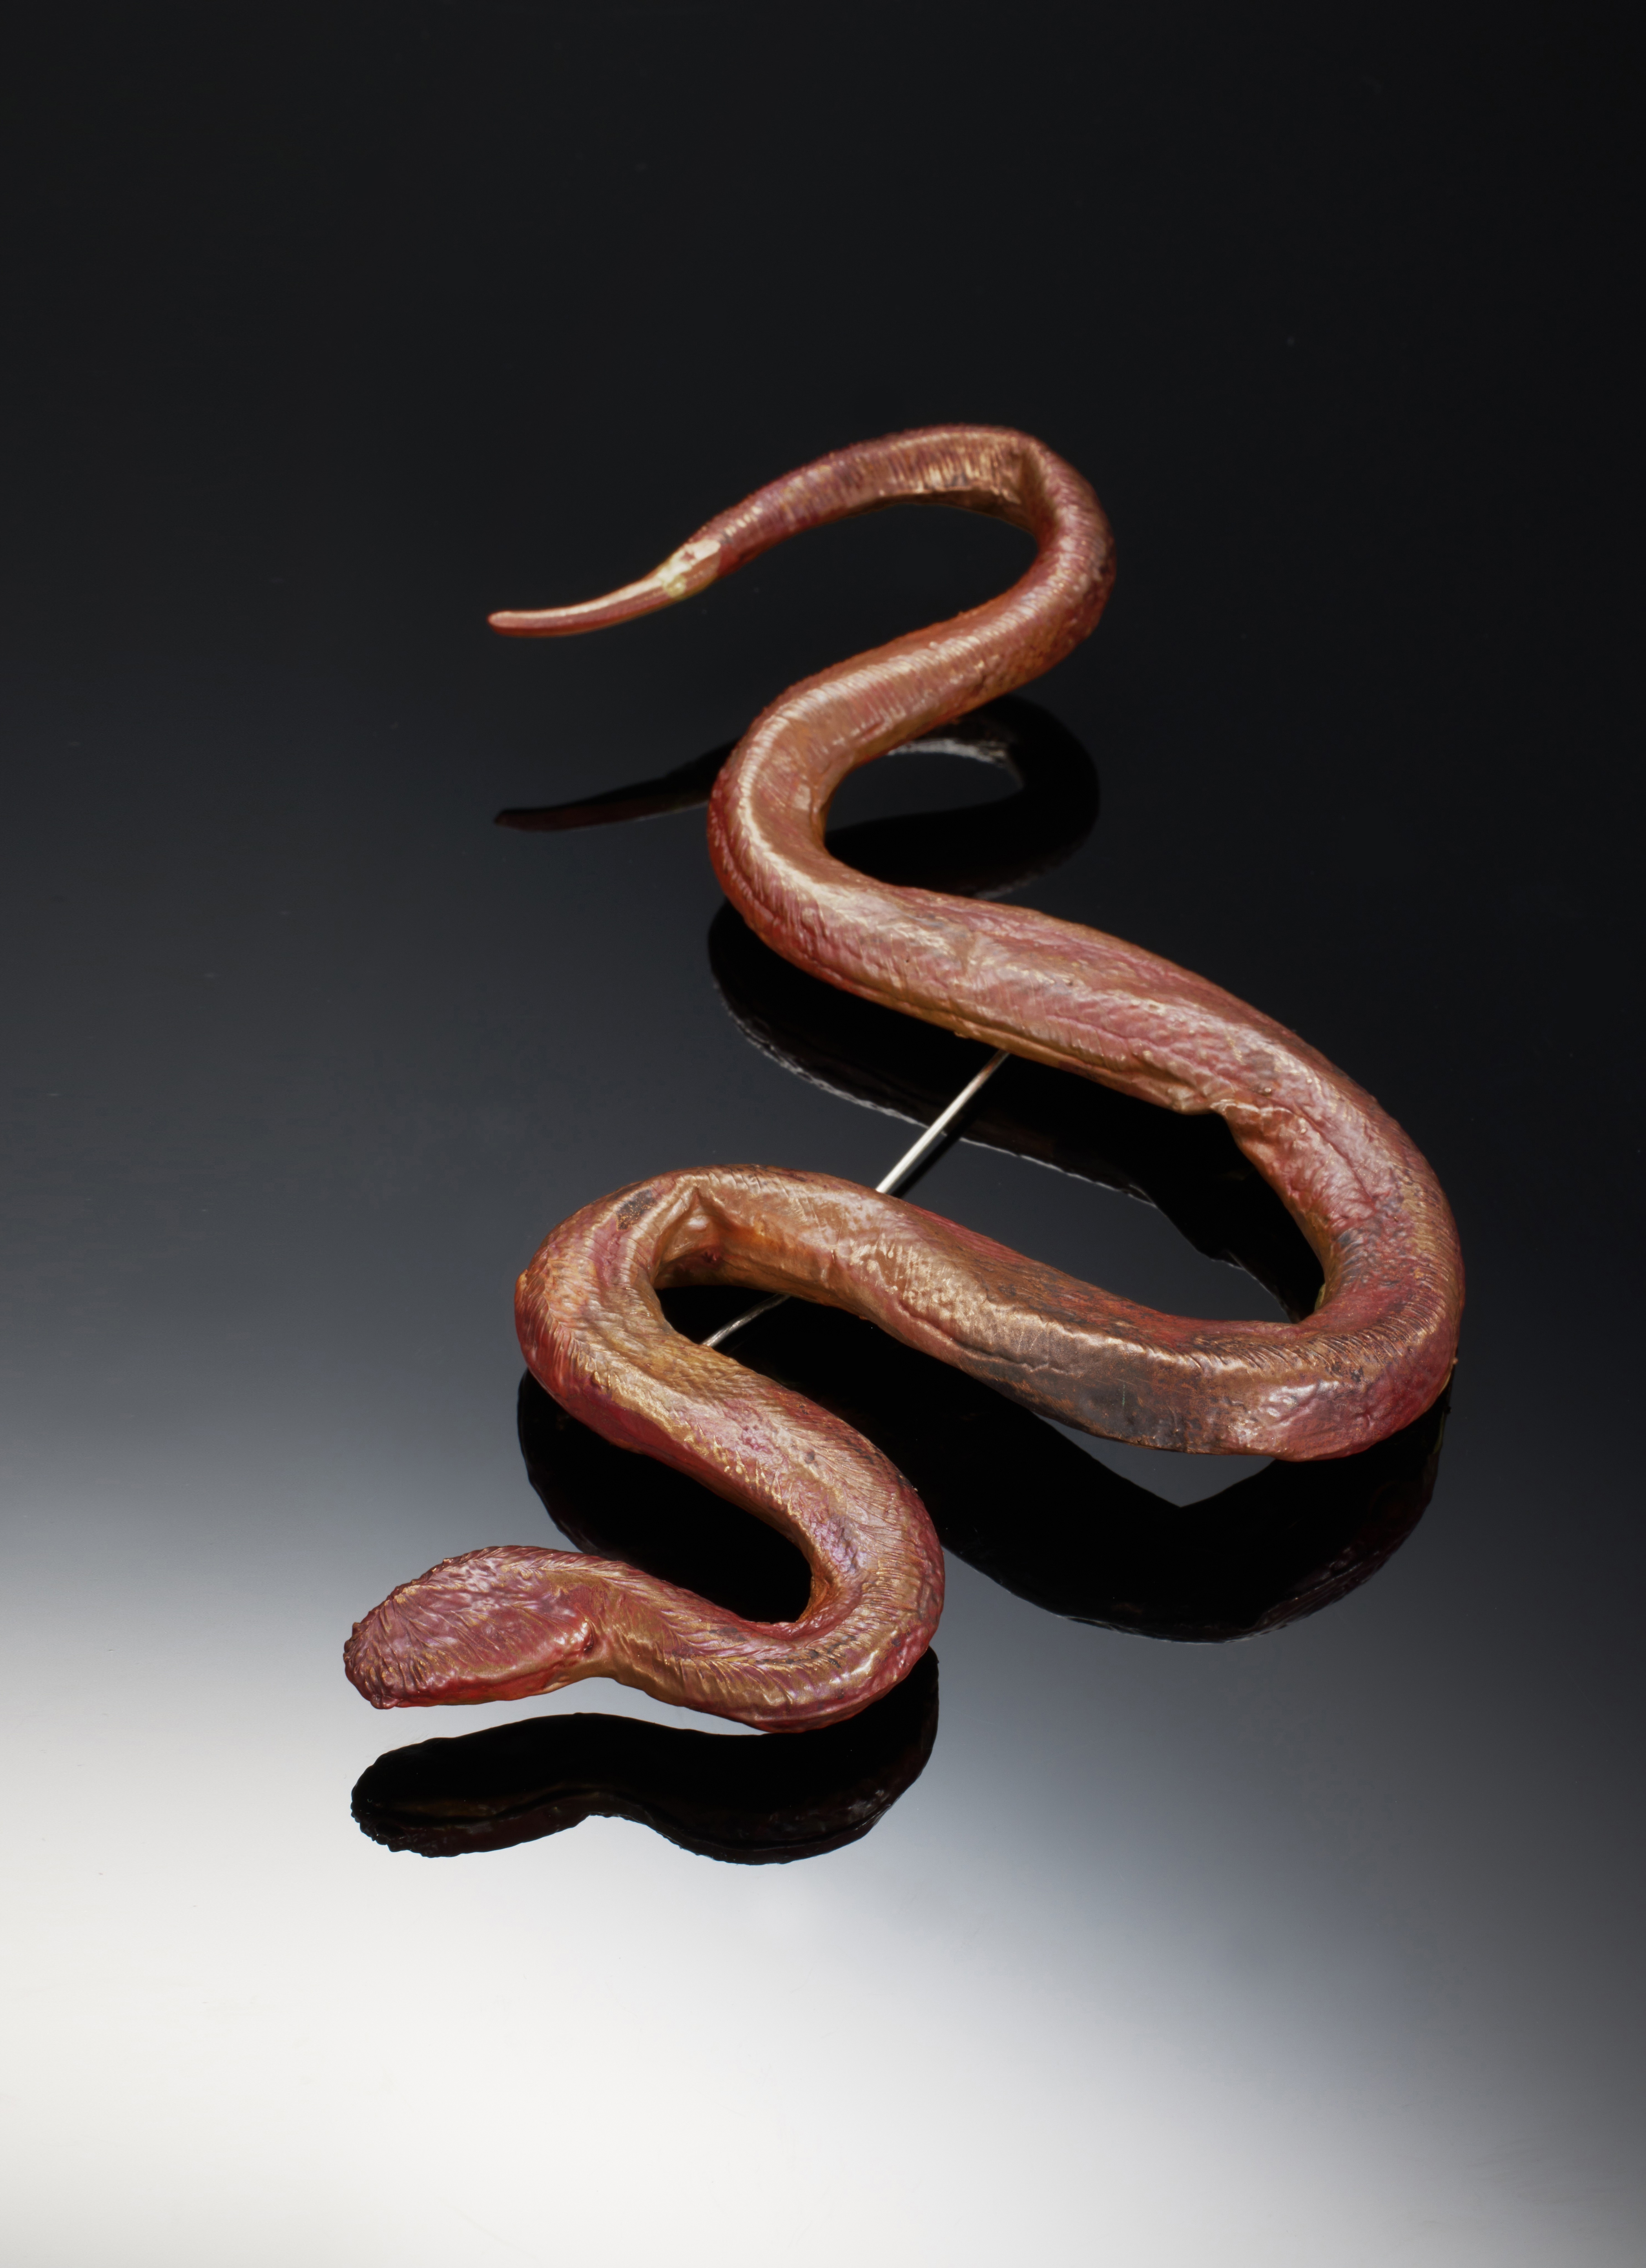 Broche serpent